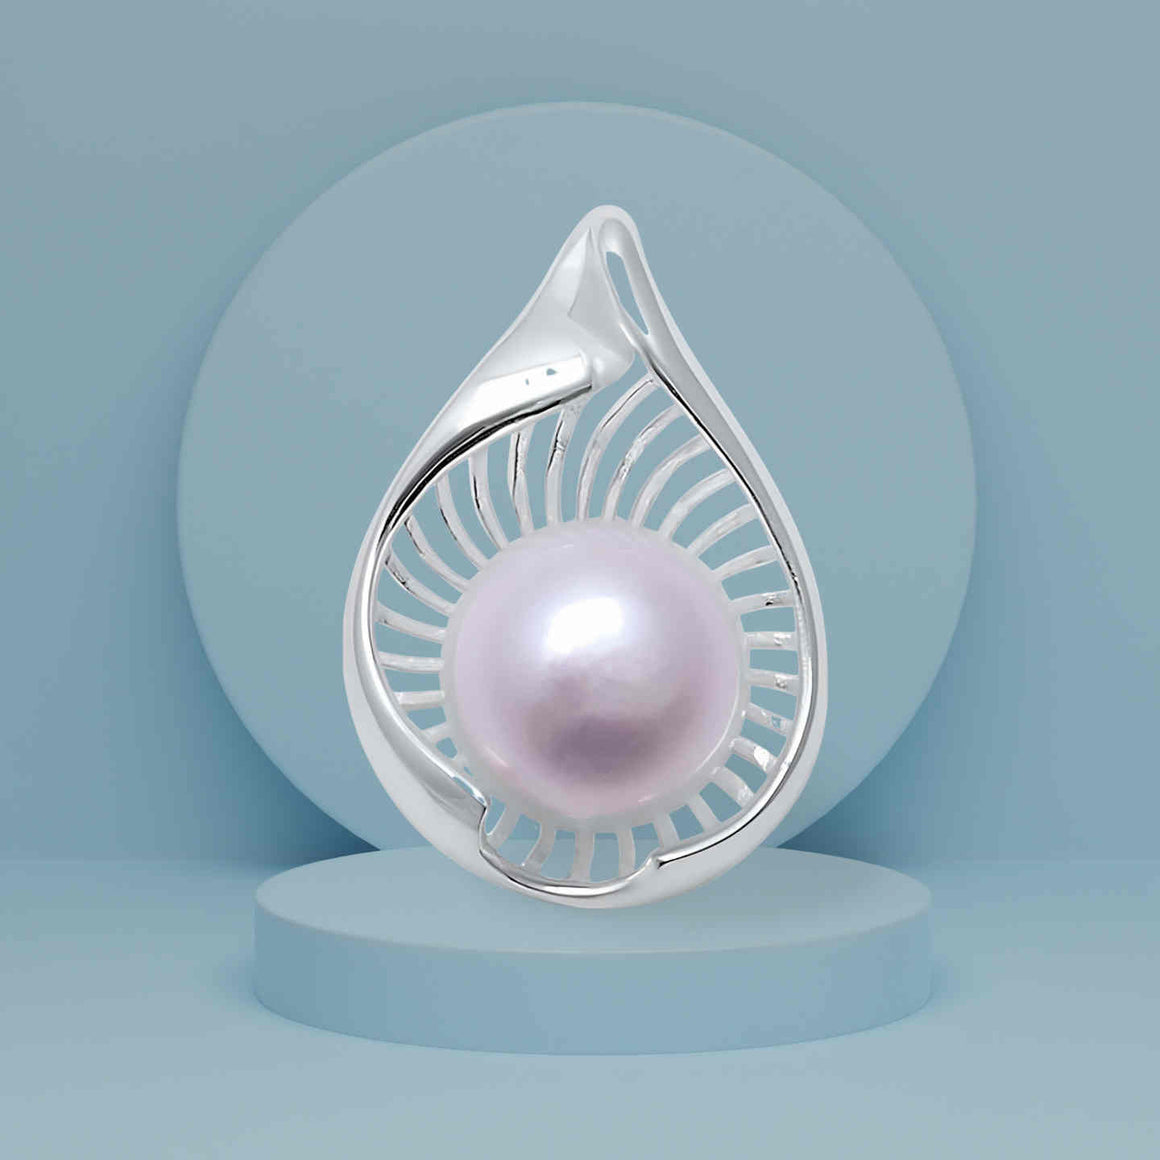 Freshwater Pearl Silver Pendant